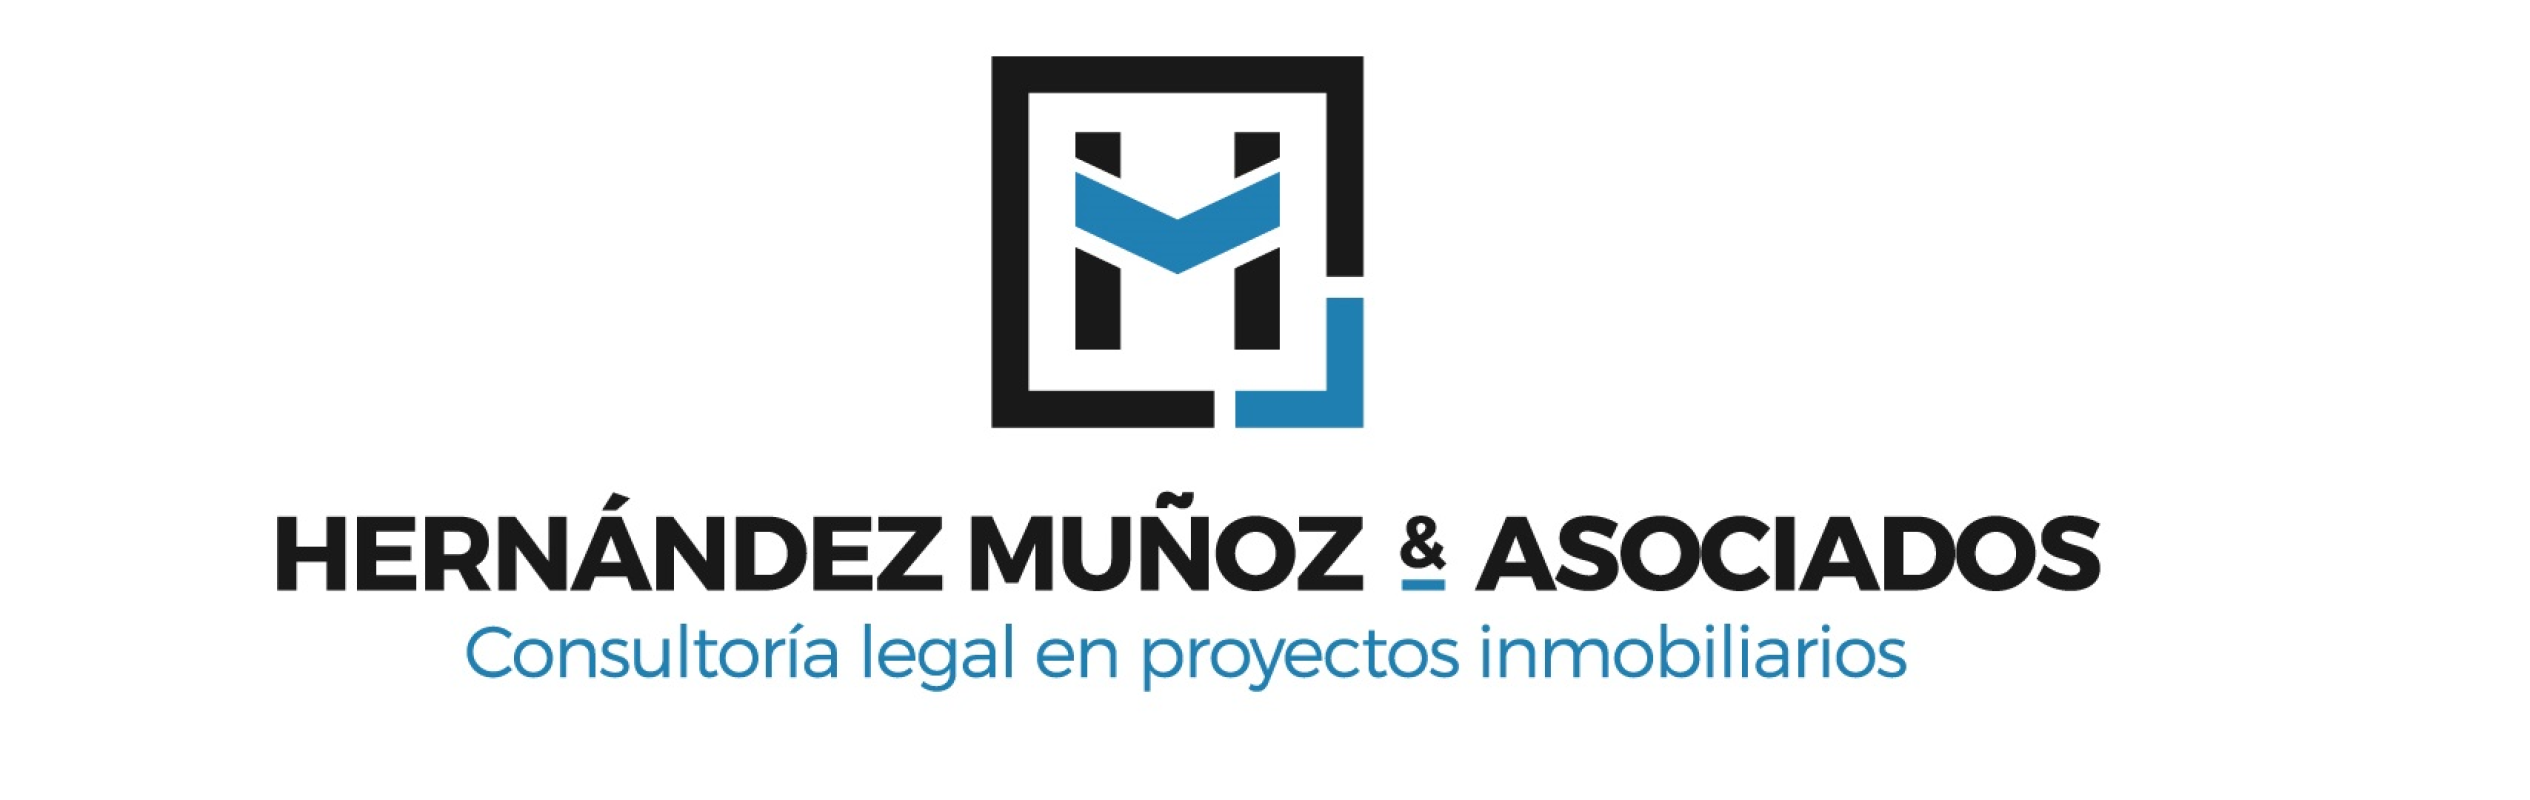 Hernández Muñoz & Asociados